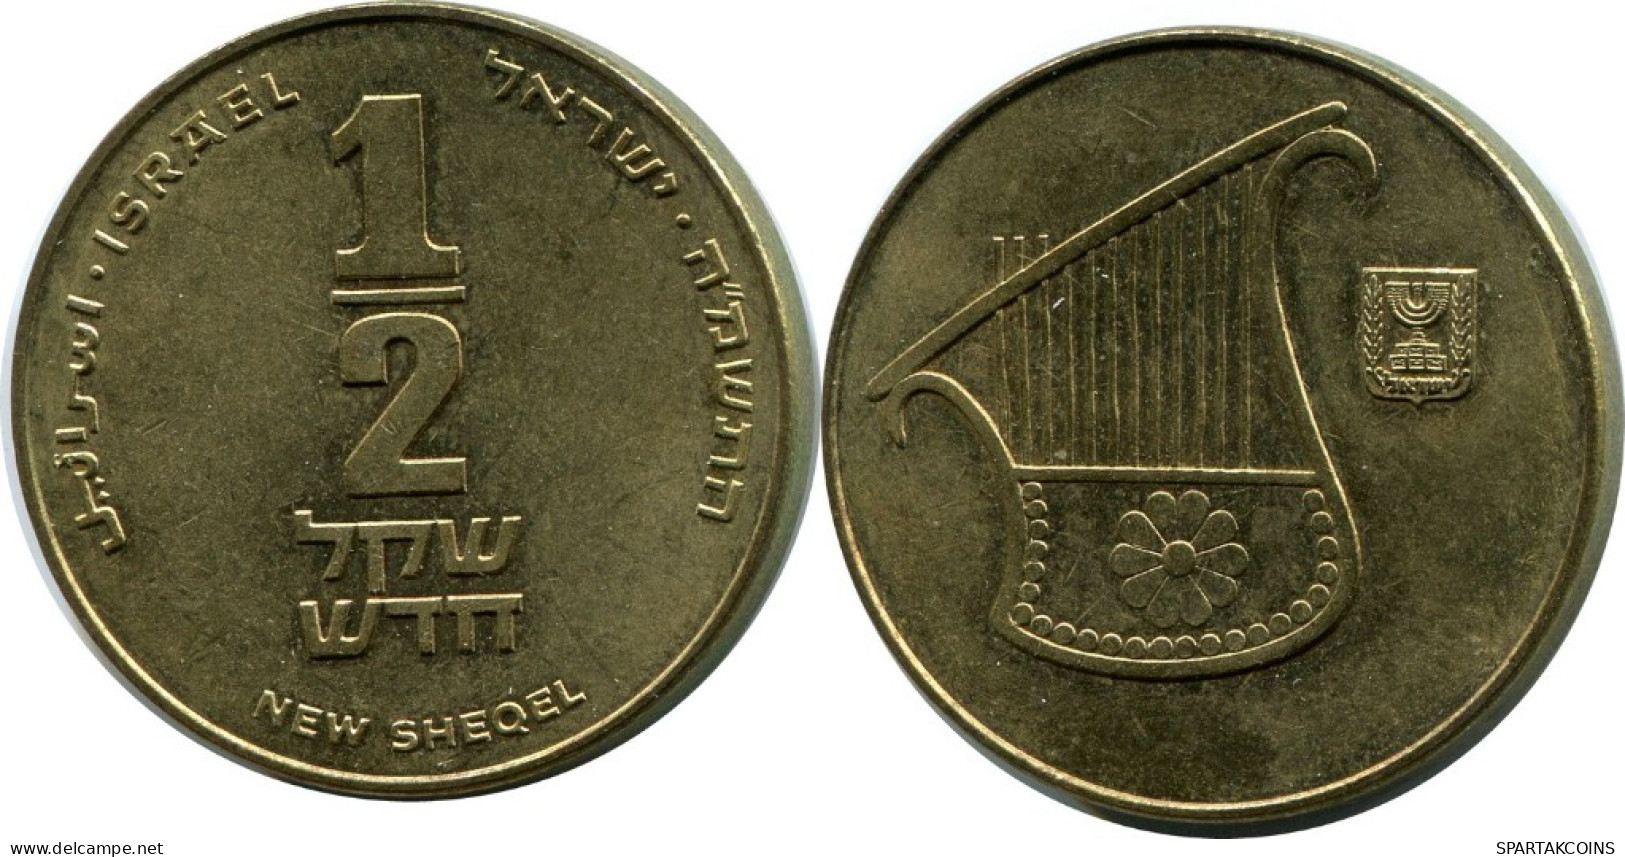 1/2 NEW SHEQEL 1985 ISRAEL Coin #AH939.U.A - Israel